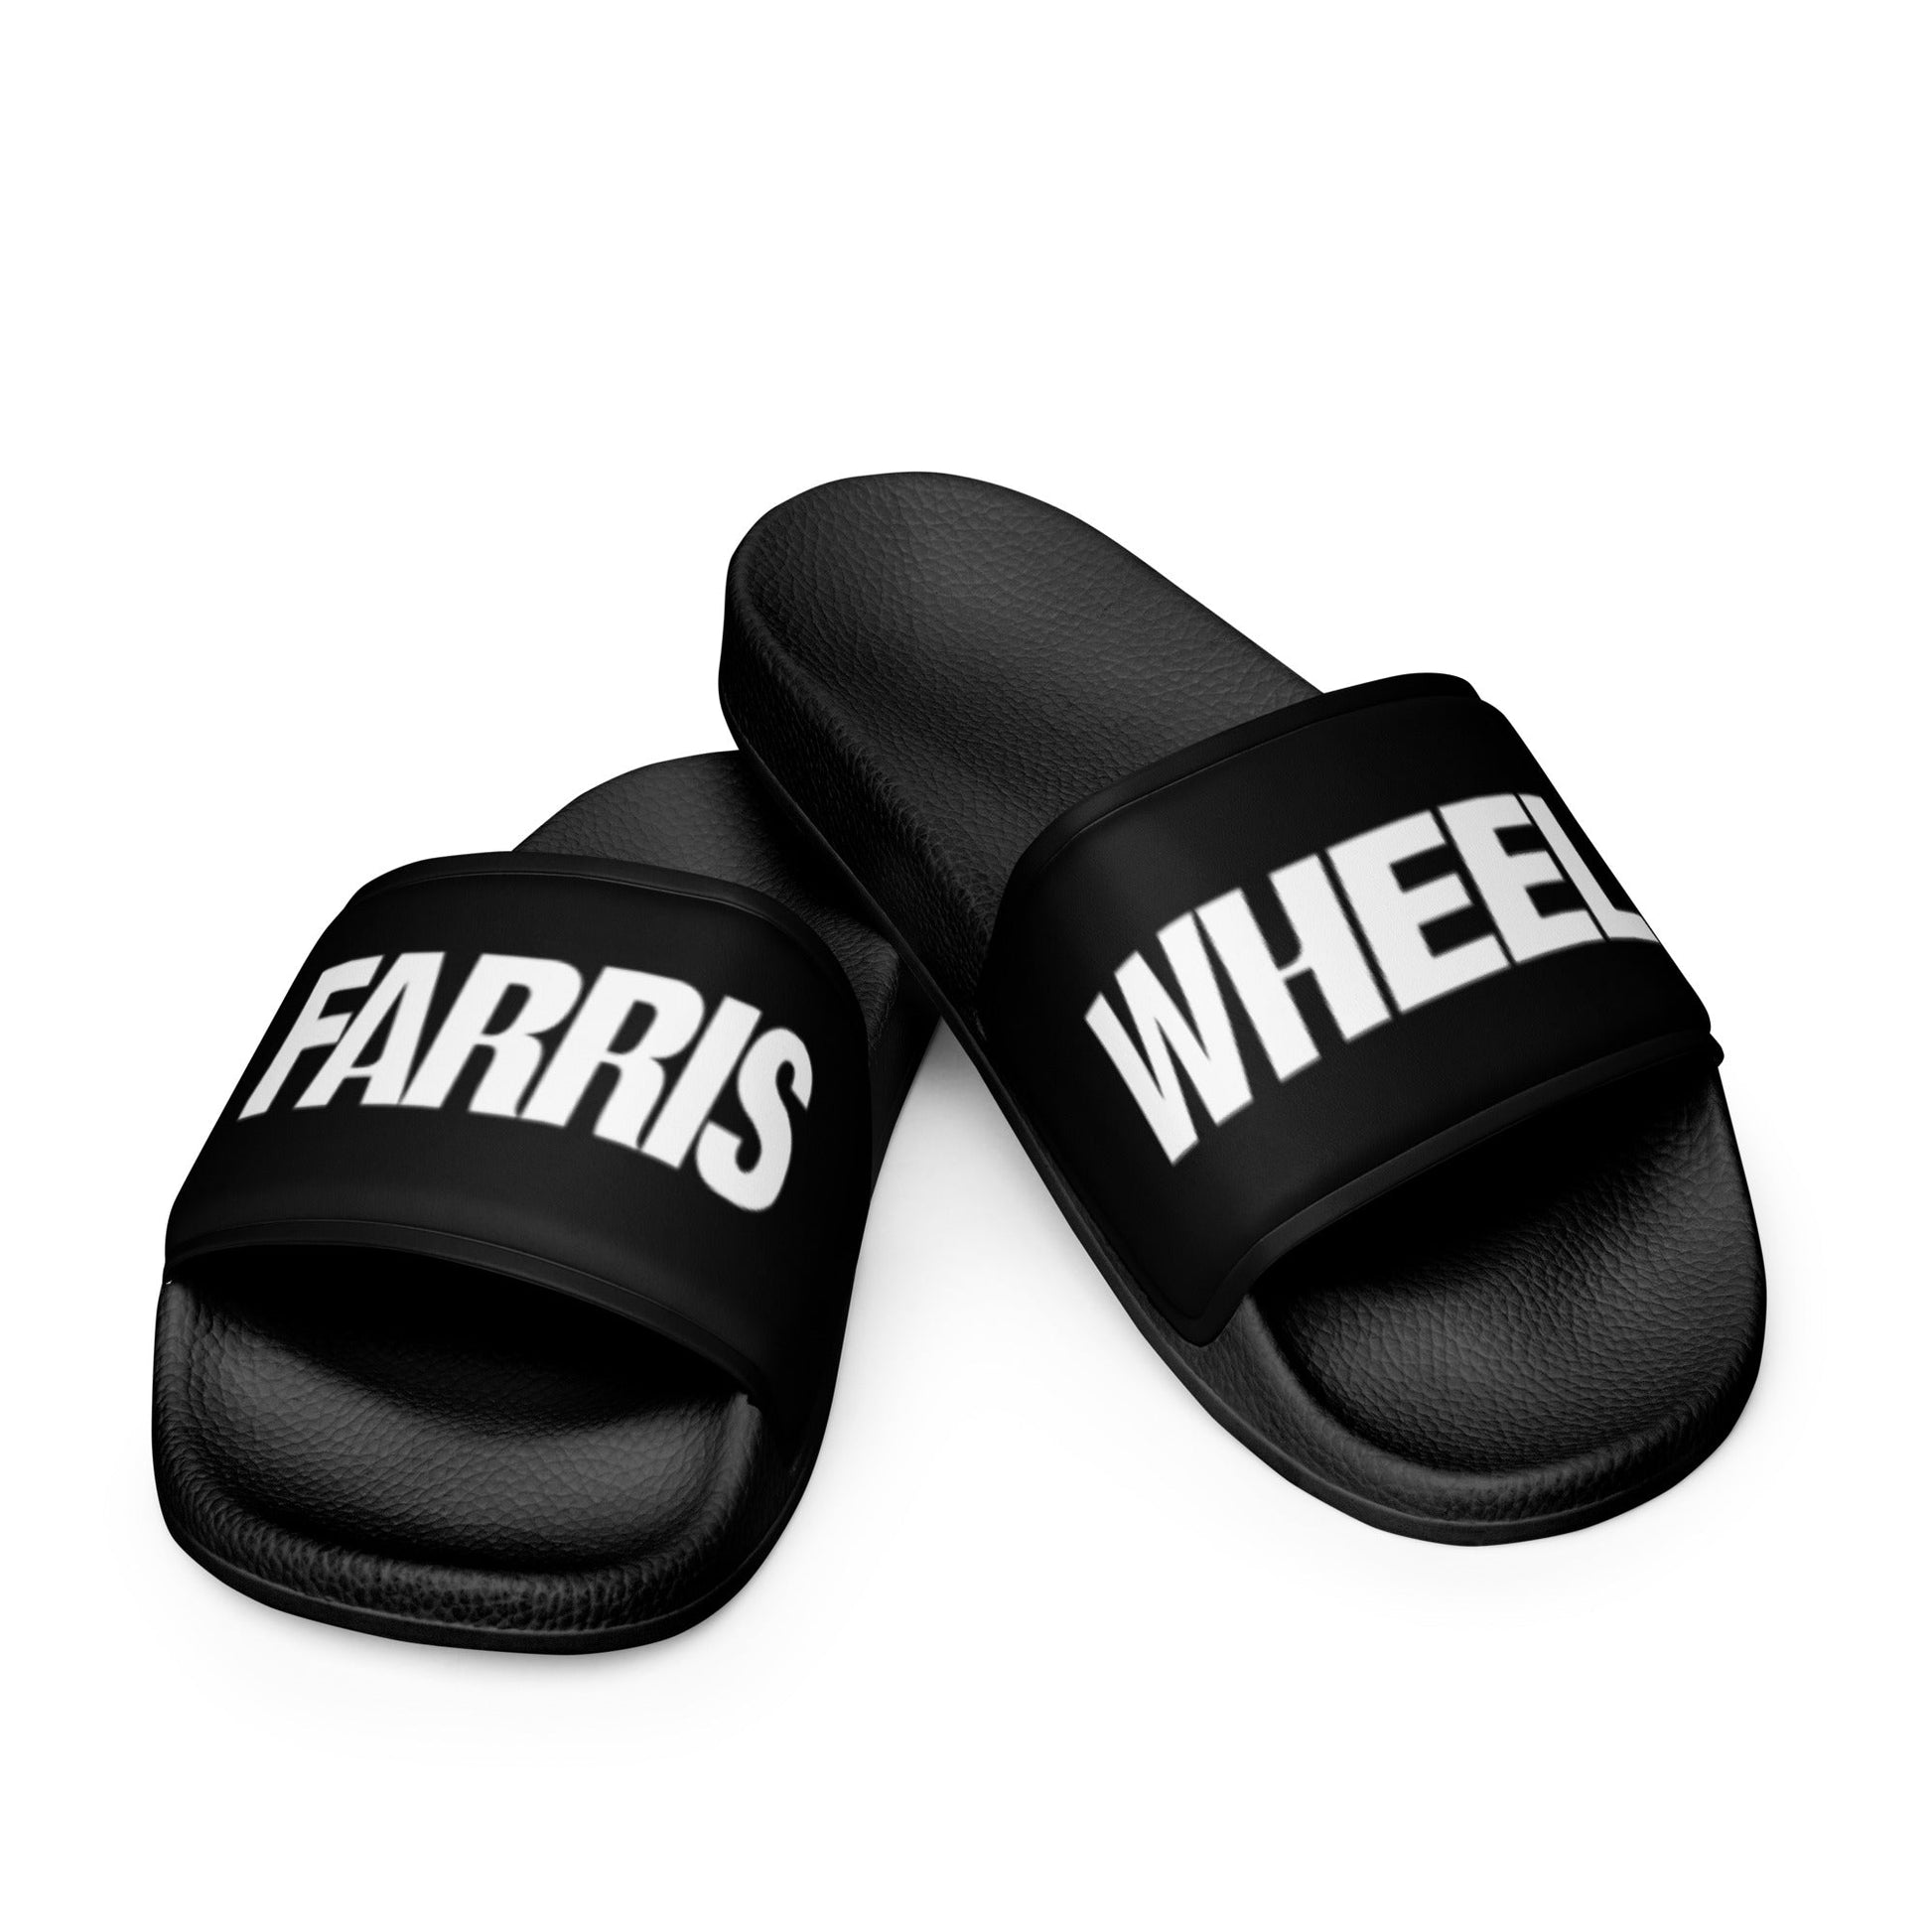 Farris Wheel Men’s Slides - BeExtra! Apparel & More